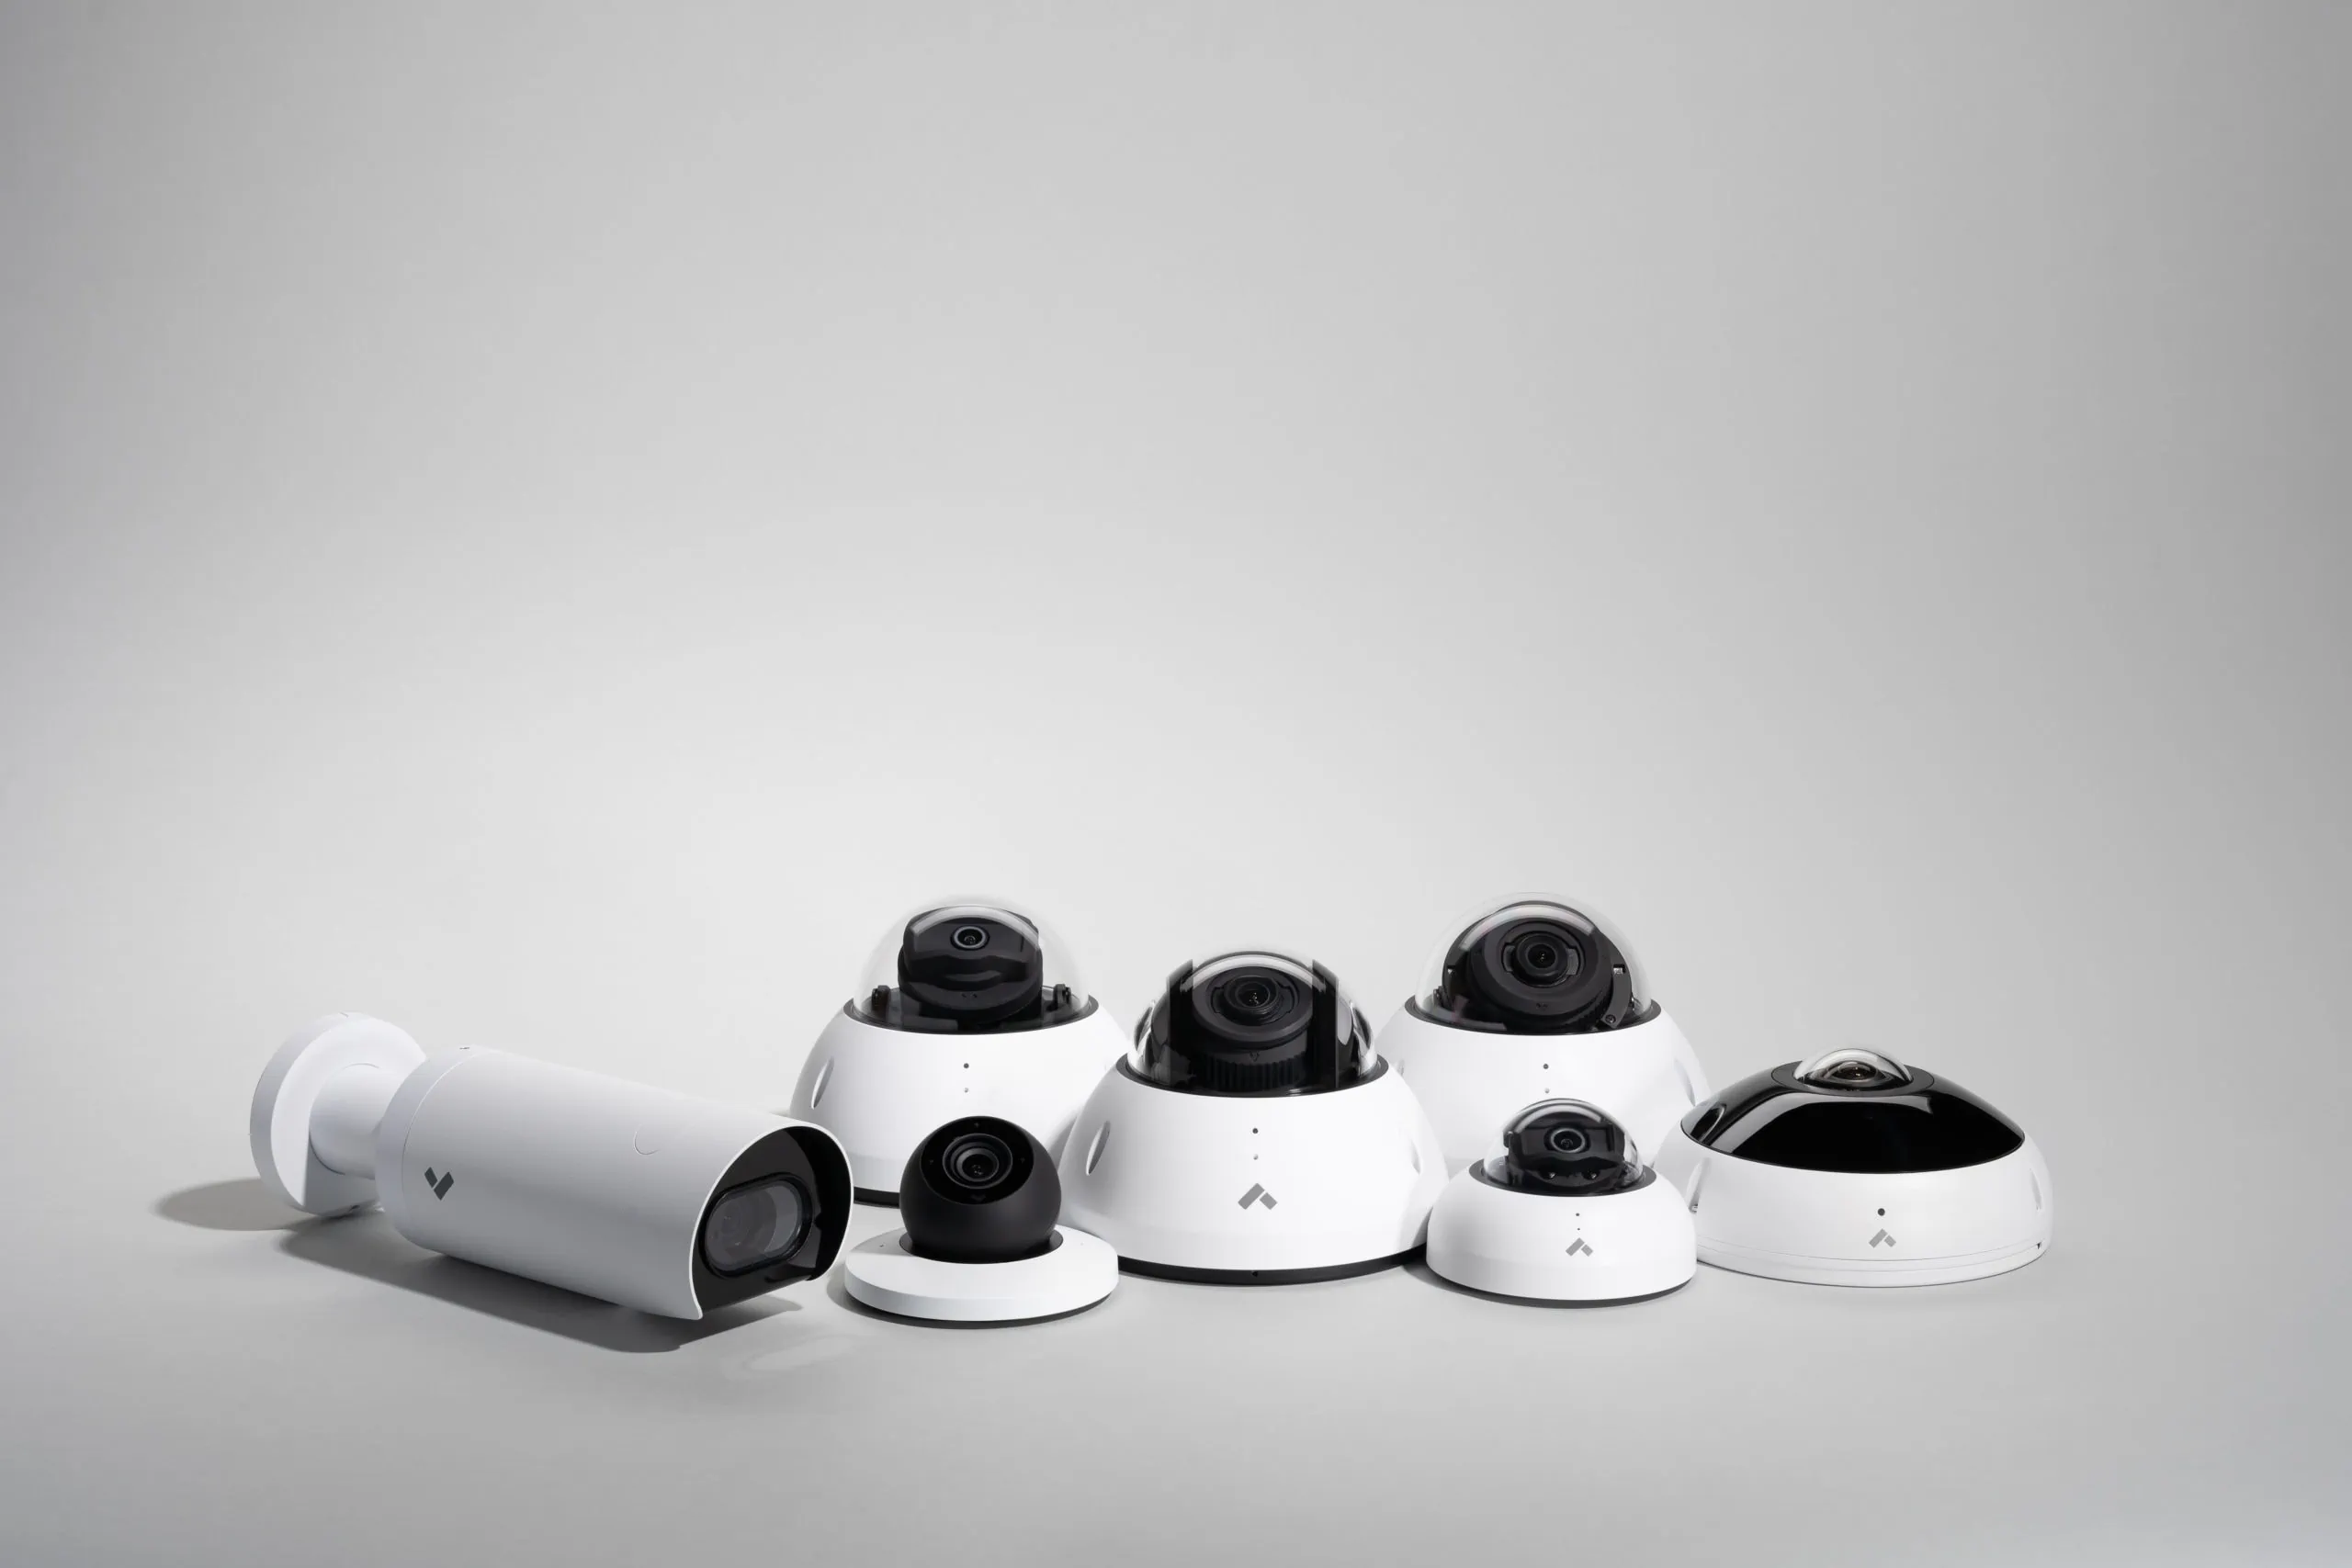 Verkada camera family for monitoring for unusual activity